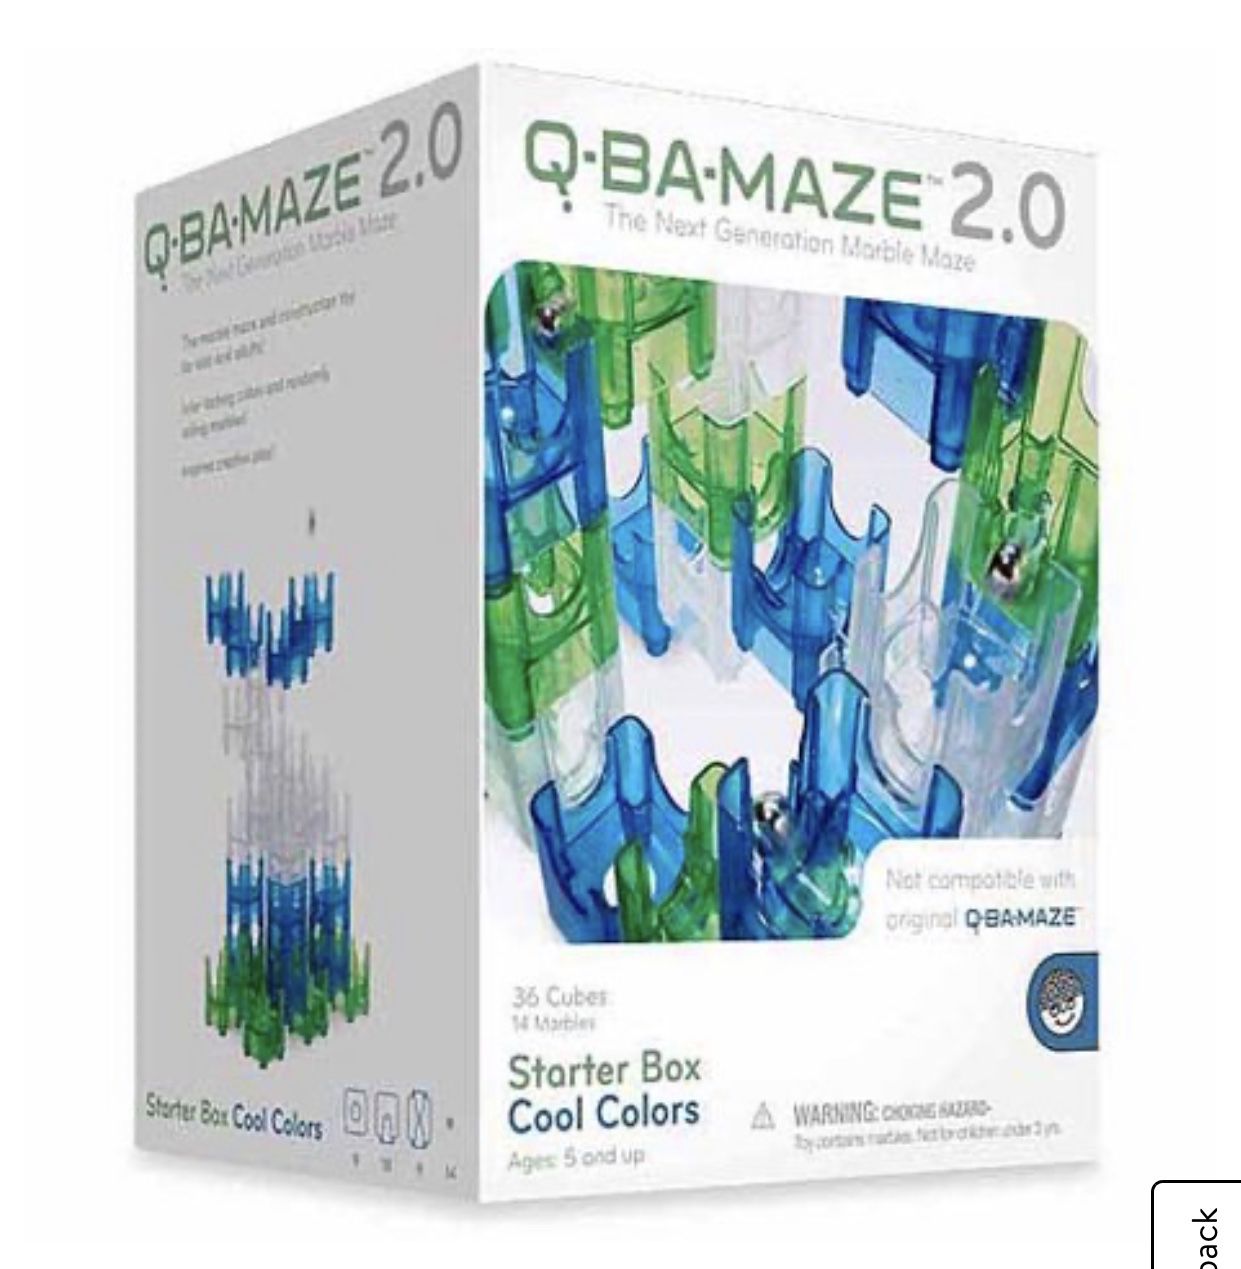 Q-BA-MAZE 2.0: Starter Box - Cool Colors - Building